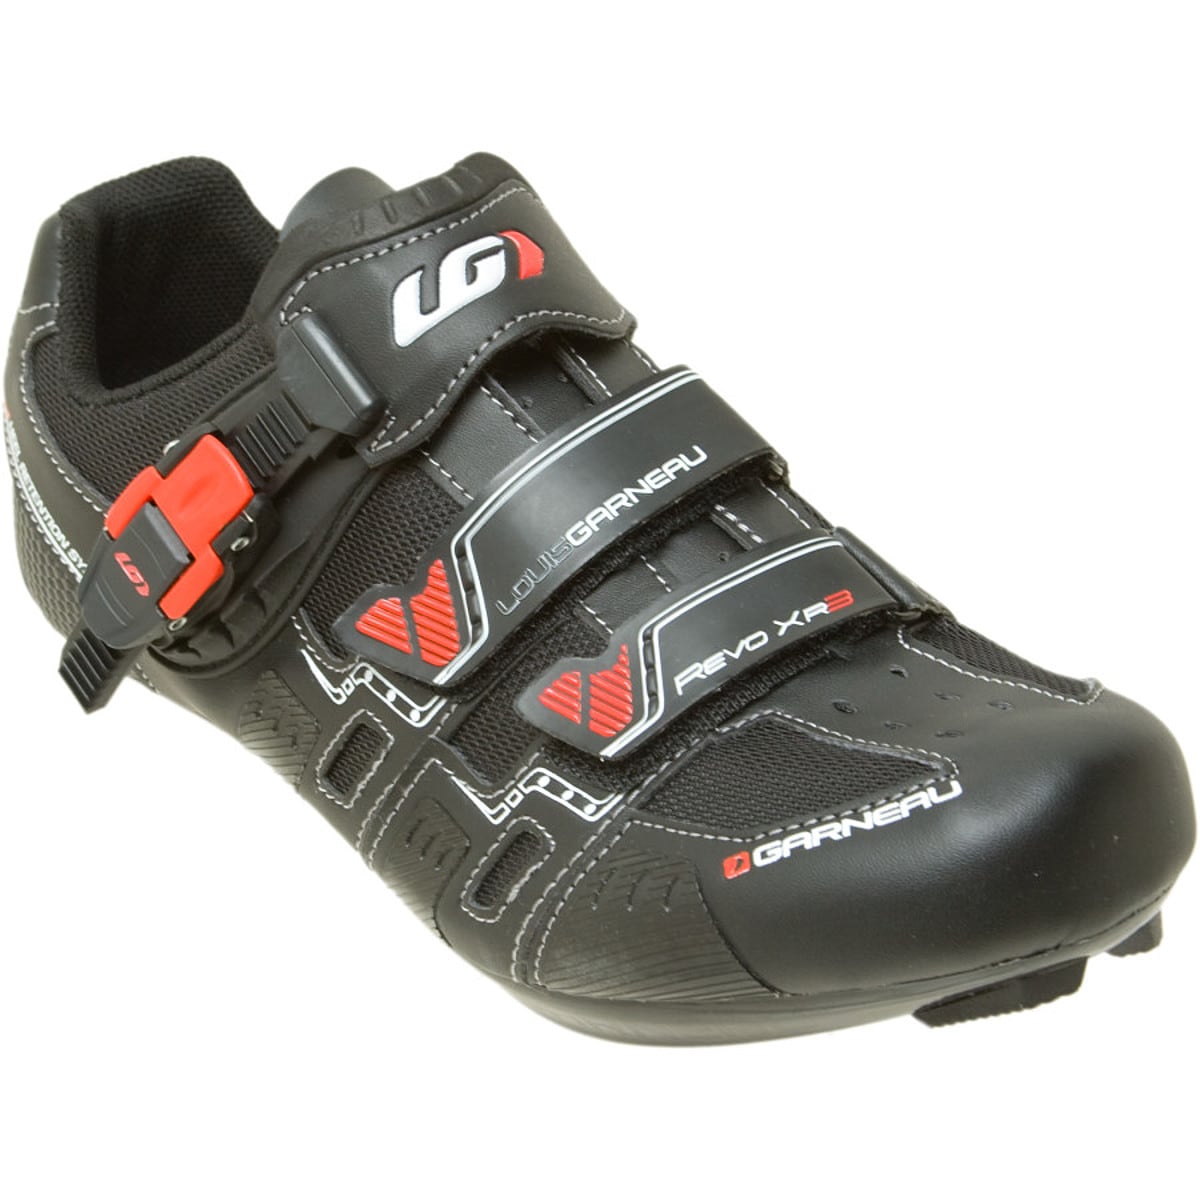 Louis Garneau 2015 Men's Revo XR3 Road Cycling Shoes Black/White-37 : Buy  Online at Best Price in KSA - Souq is now : Fashion